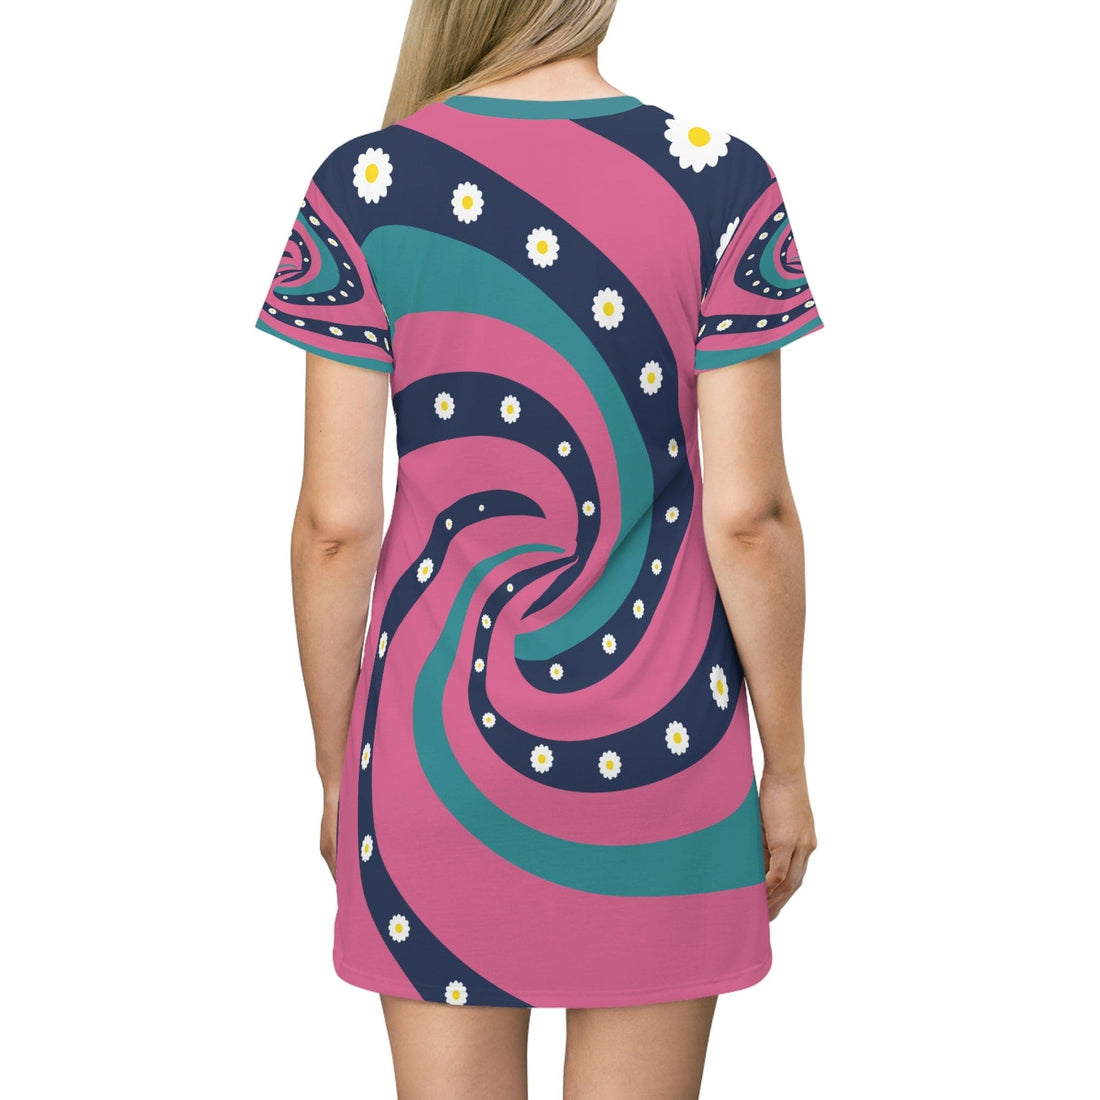 Kate McEnroe New York Retro 70s Psychedelic Groovy Swirl Flower Power Tshirt Dress in Mid Century Modern Teal Blue, Pink, Navy, MCM Summer Party Dress, Beach WearDresses21474881676877458734